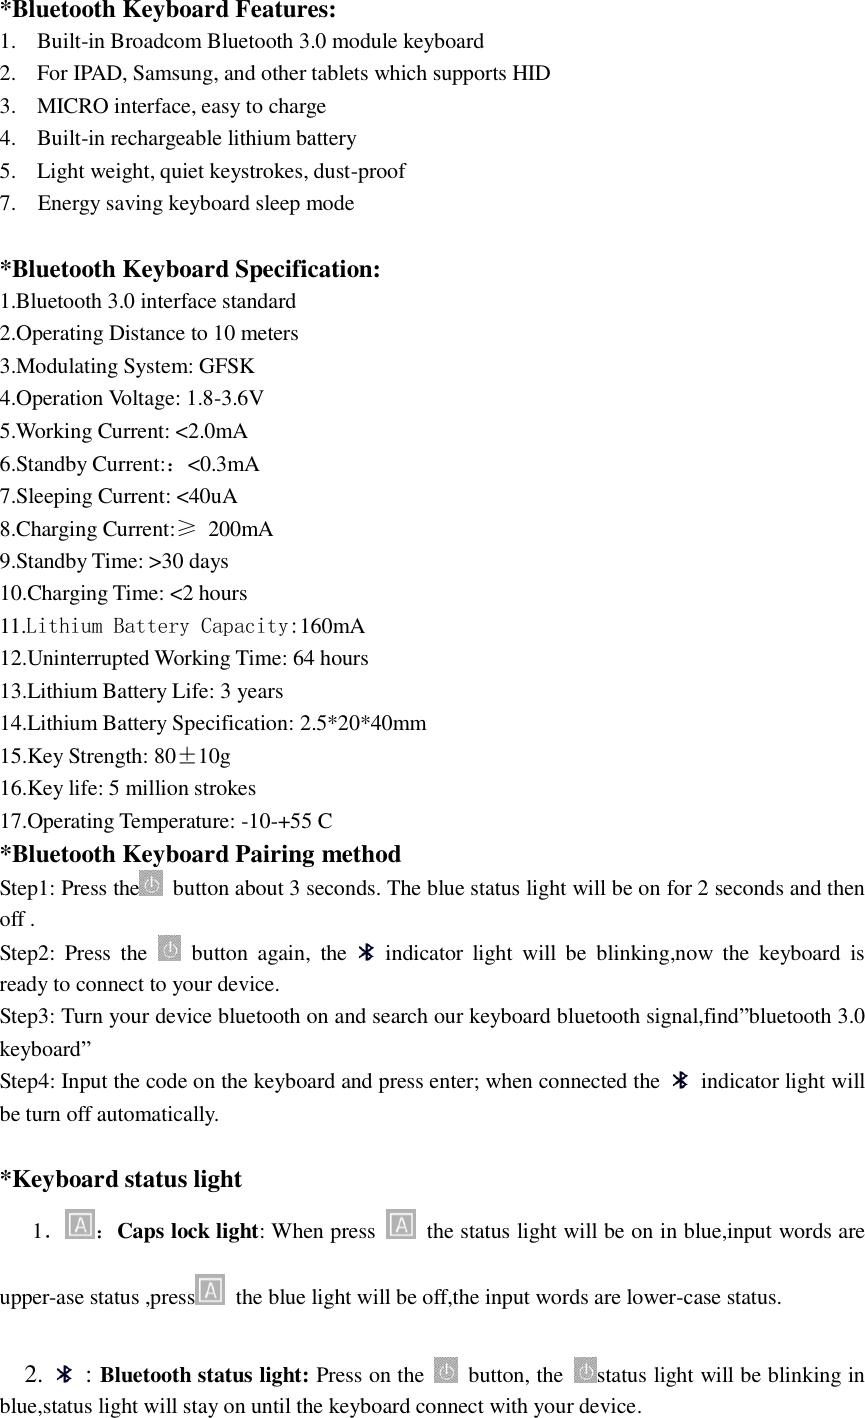 Hastech Technology HB030B Bluetooth Keyboard User Manual